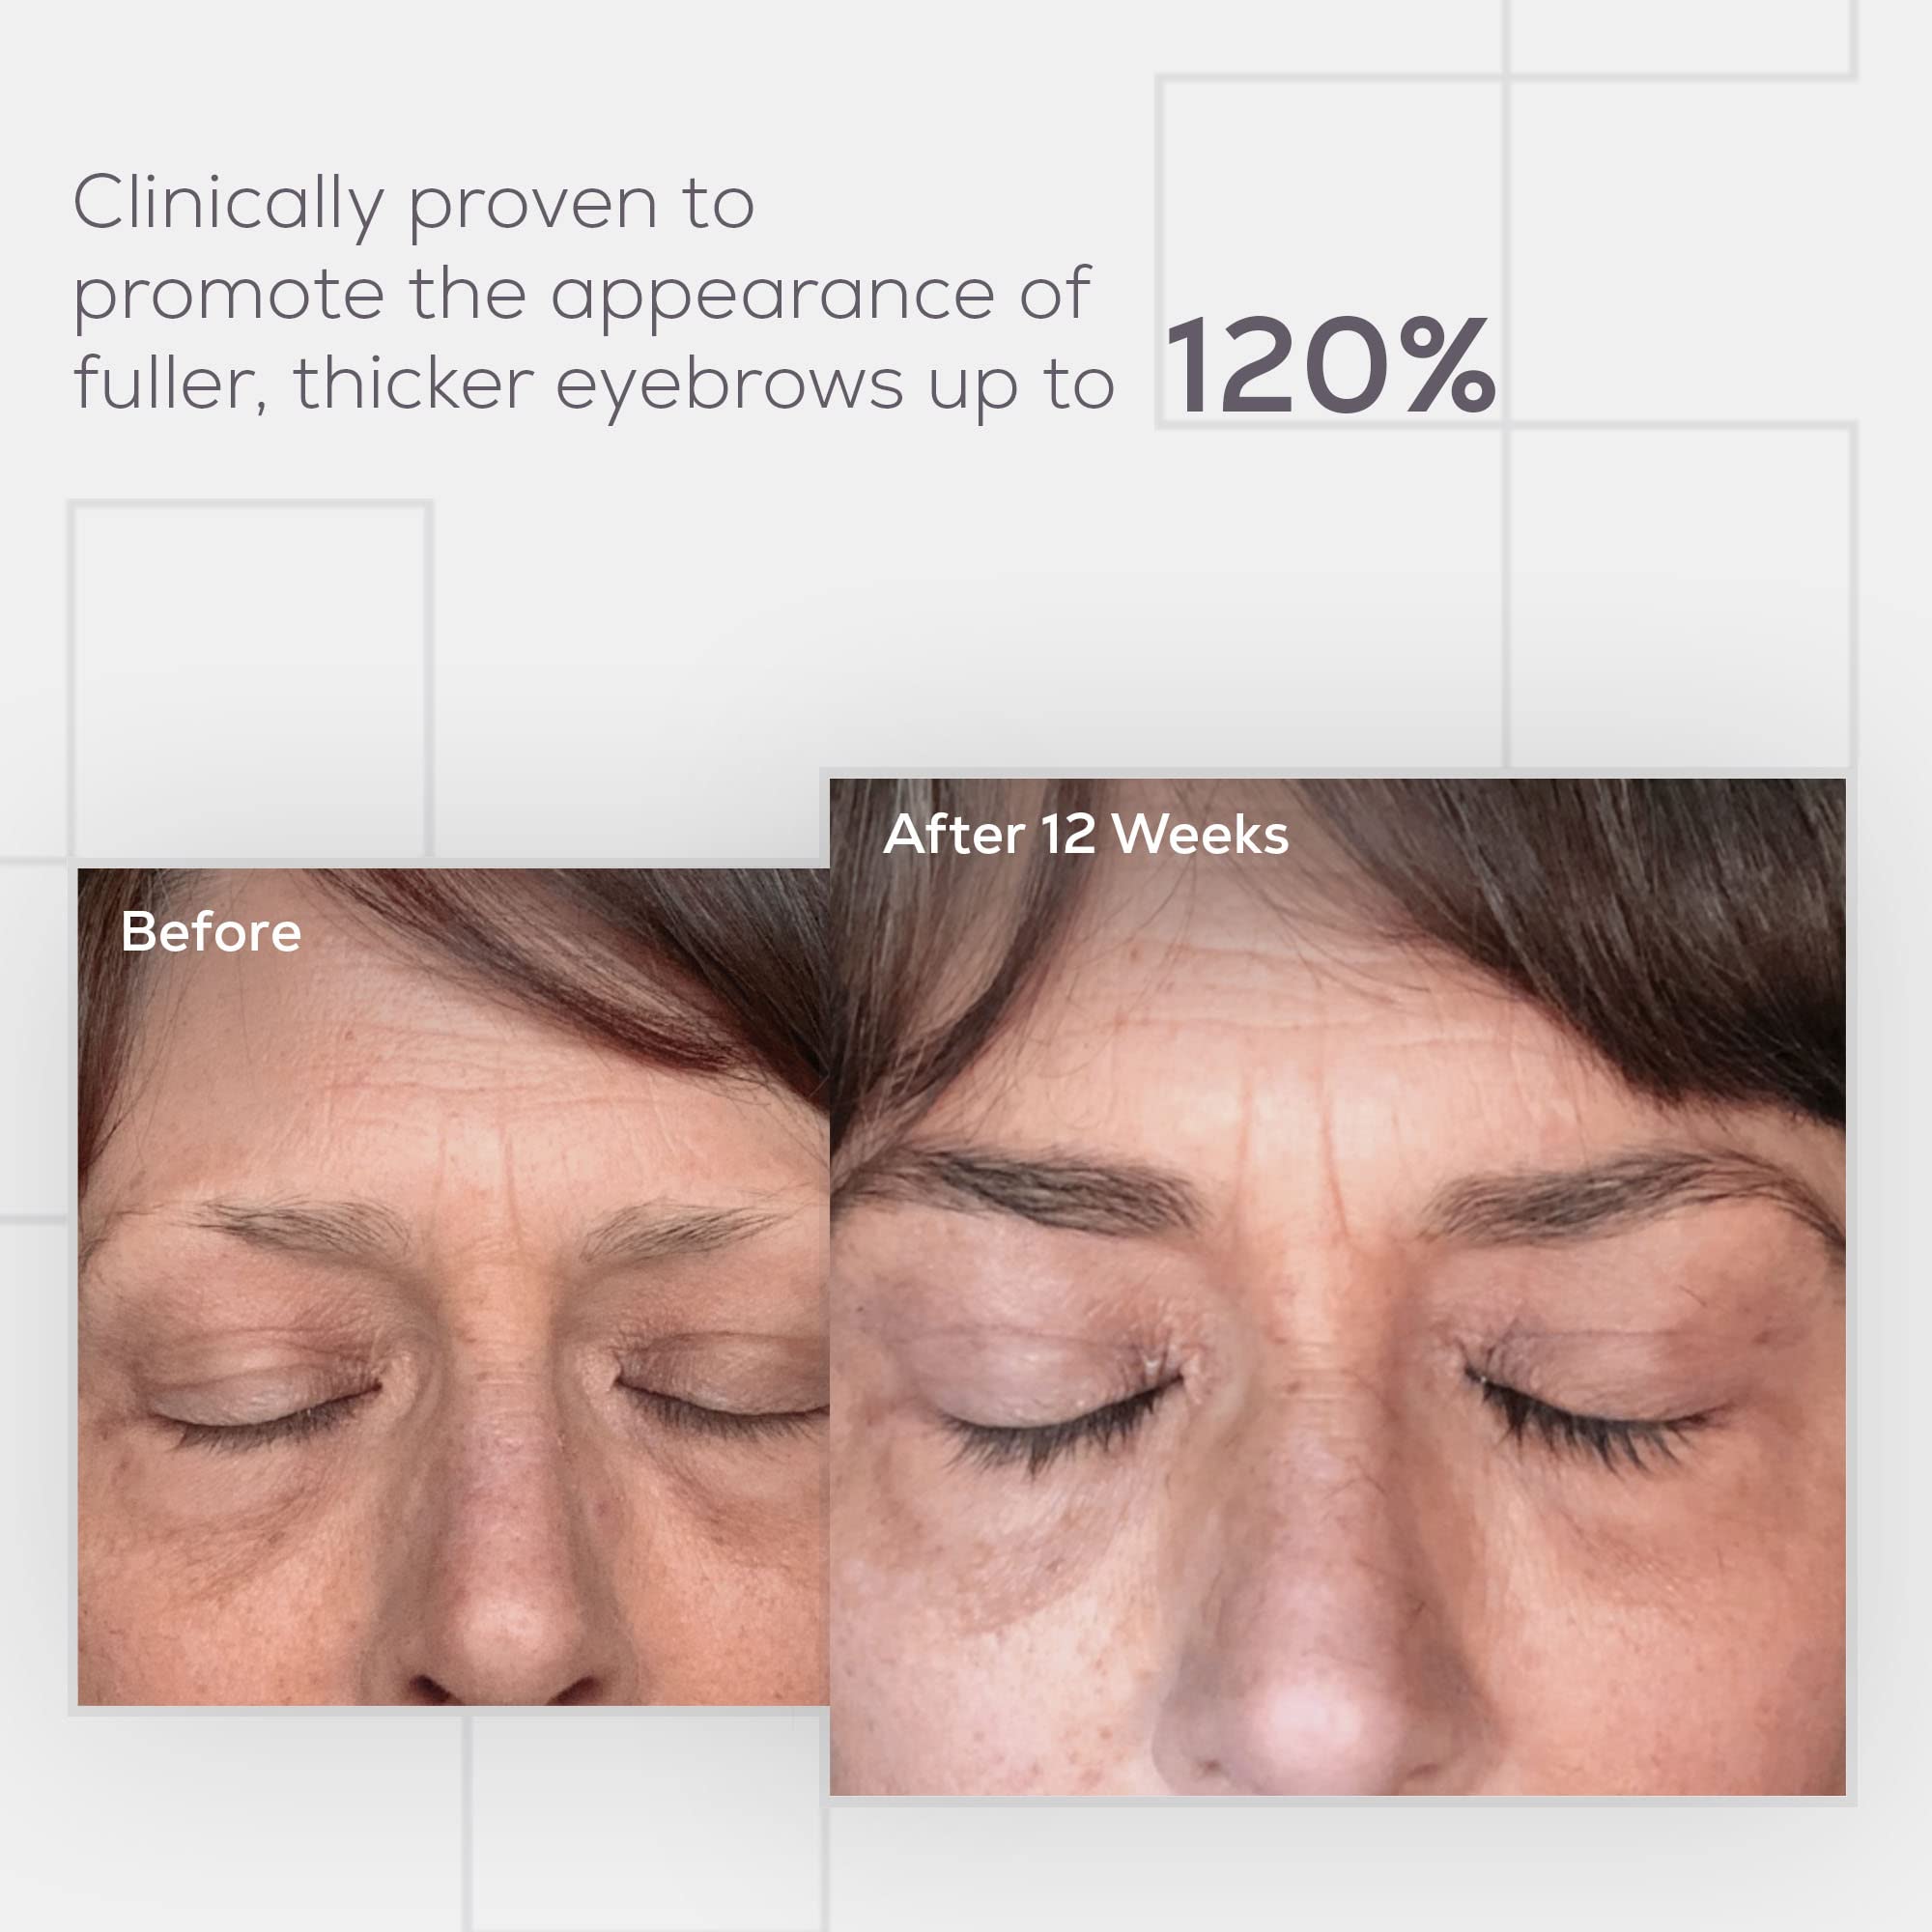 NULASTIN BROW Shape Altering Serum with Elastaplex, Eyebrow Enhancing Treatment for Thicker Looking Brows, Vegan-Friendly & Cruelty-Free (3 ml)